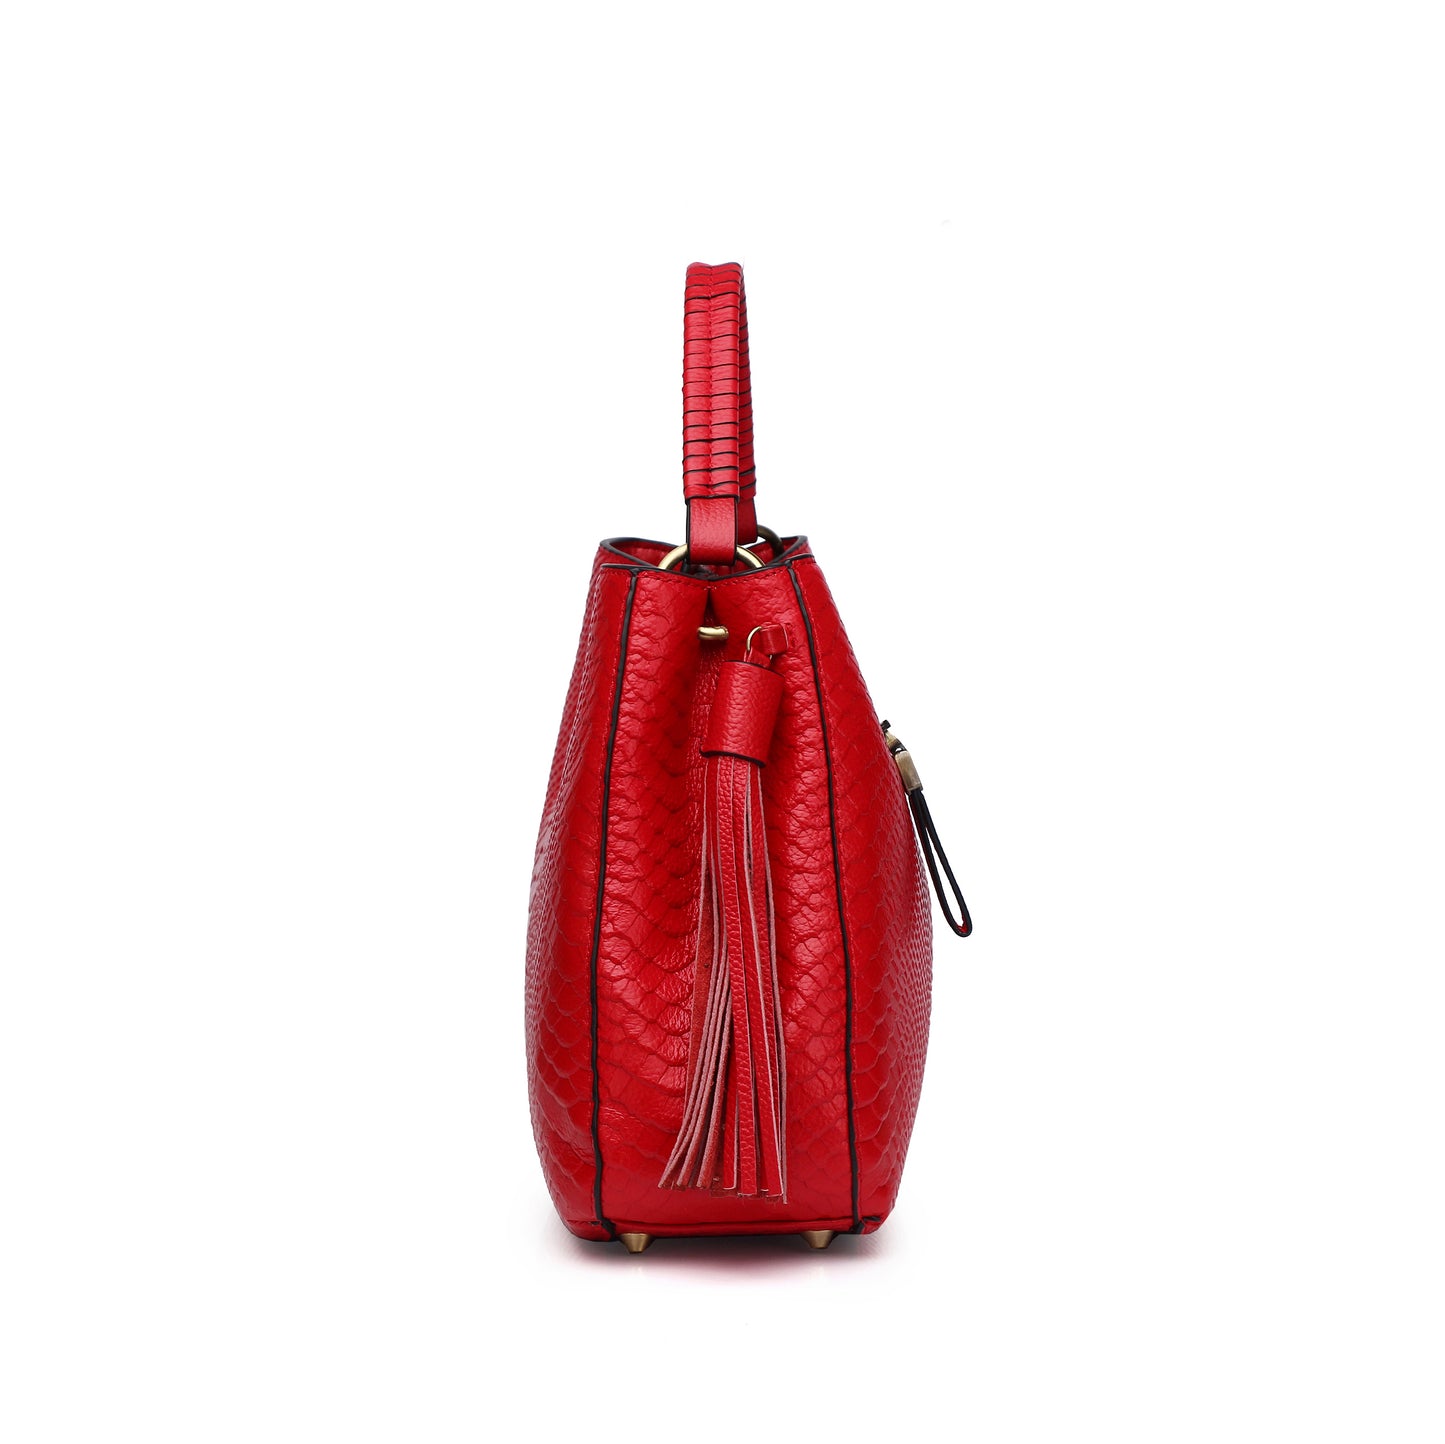 Women's genuine cowhide leather handbag crocodile print Barbara design V2 by Tomorrow Closet